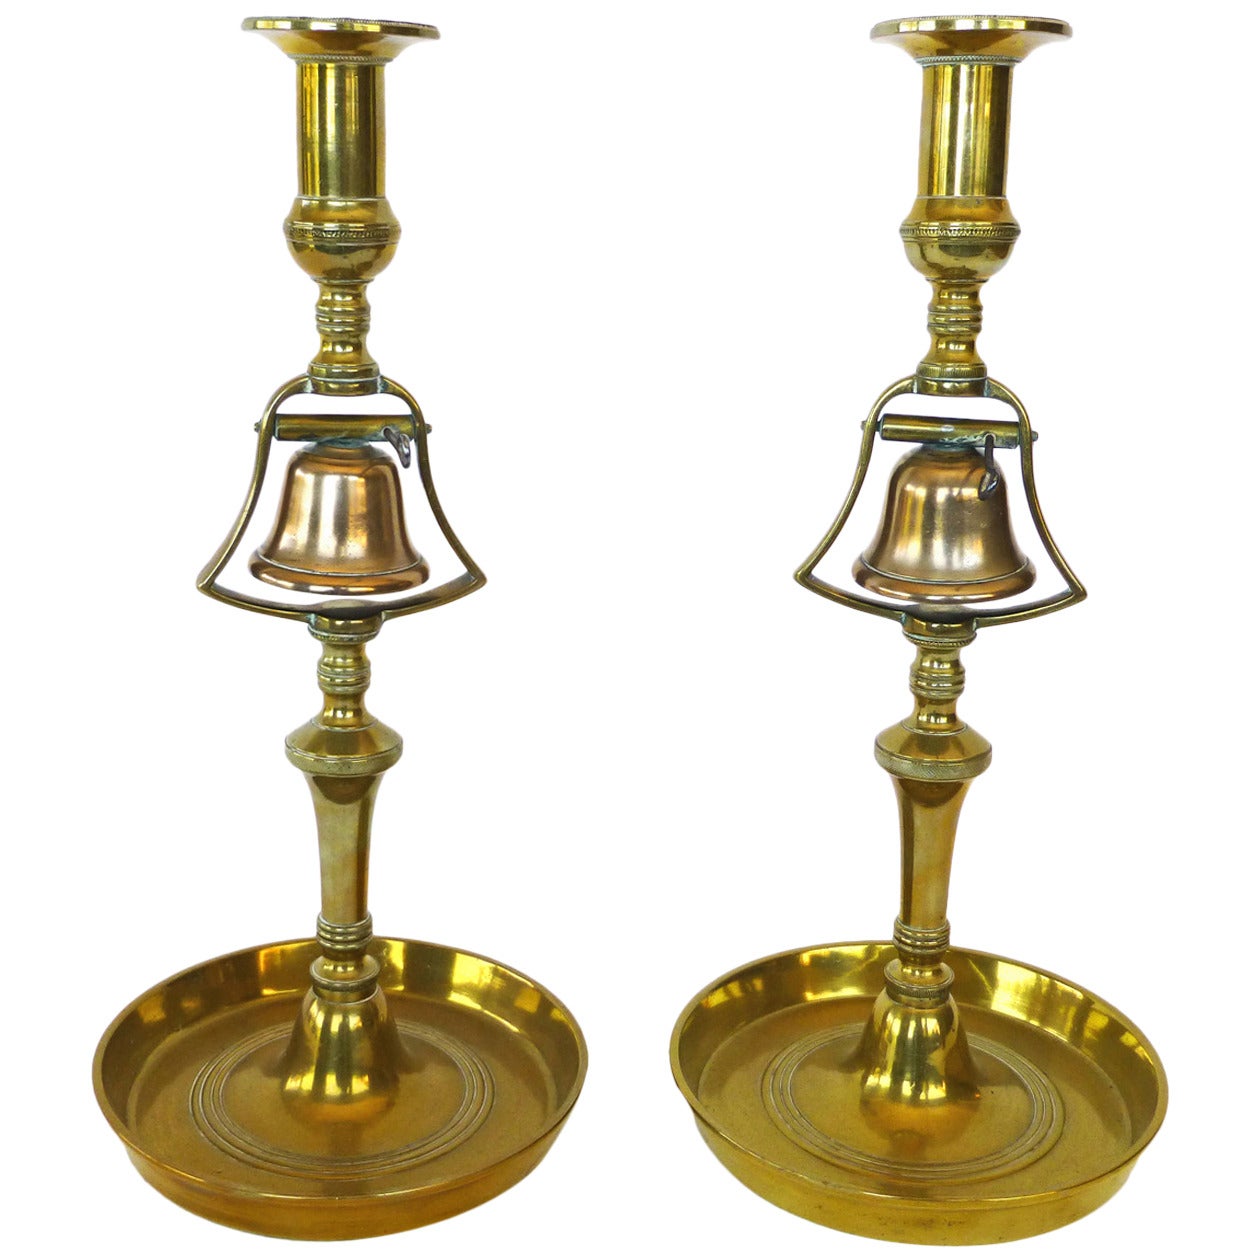 Pair of Rare English Brass Tavern Candlesticks with Bells, circa 1820